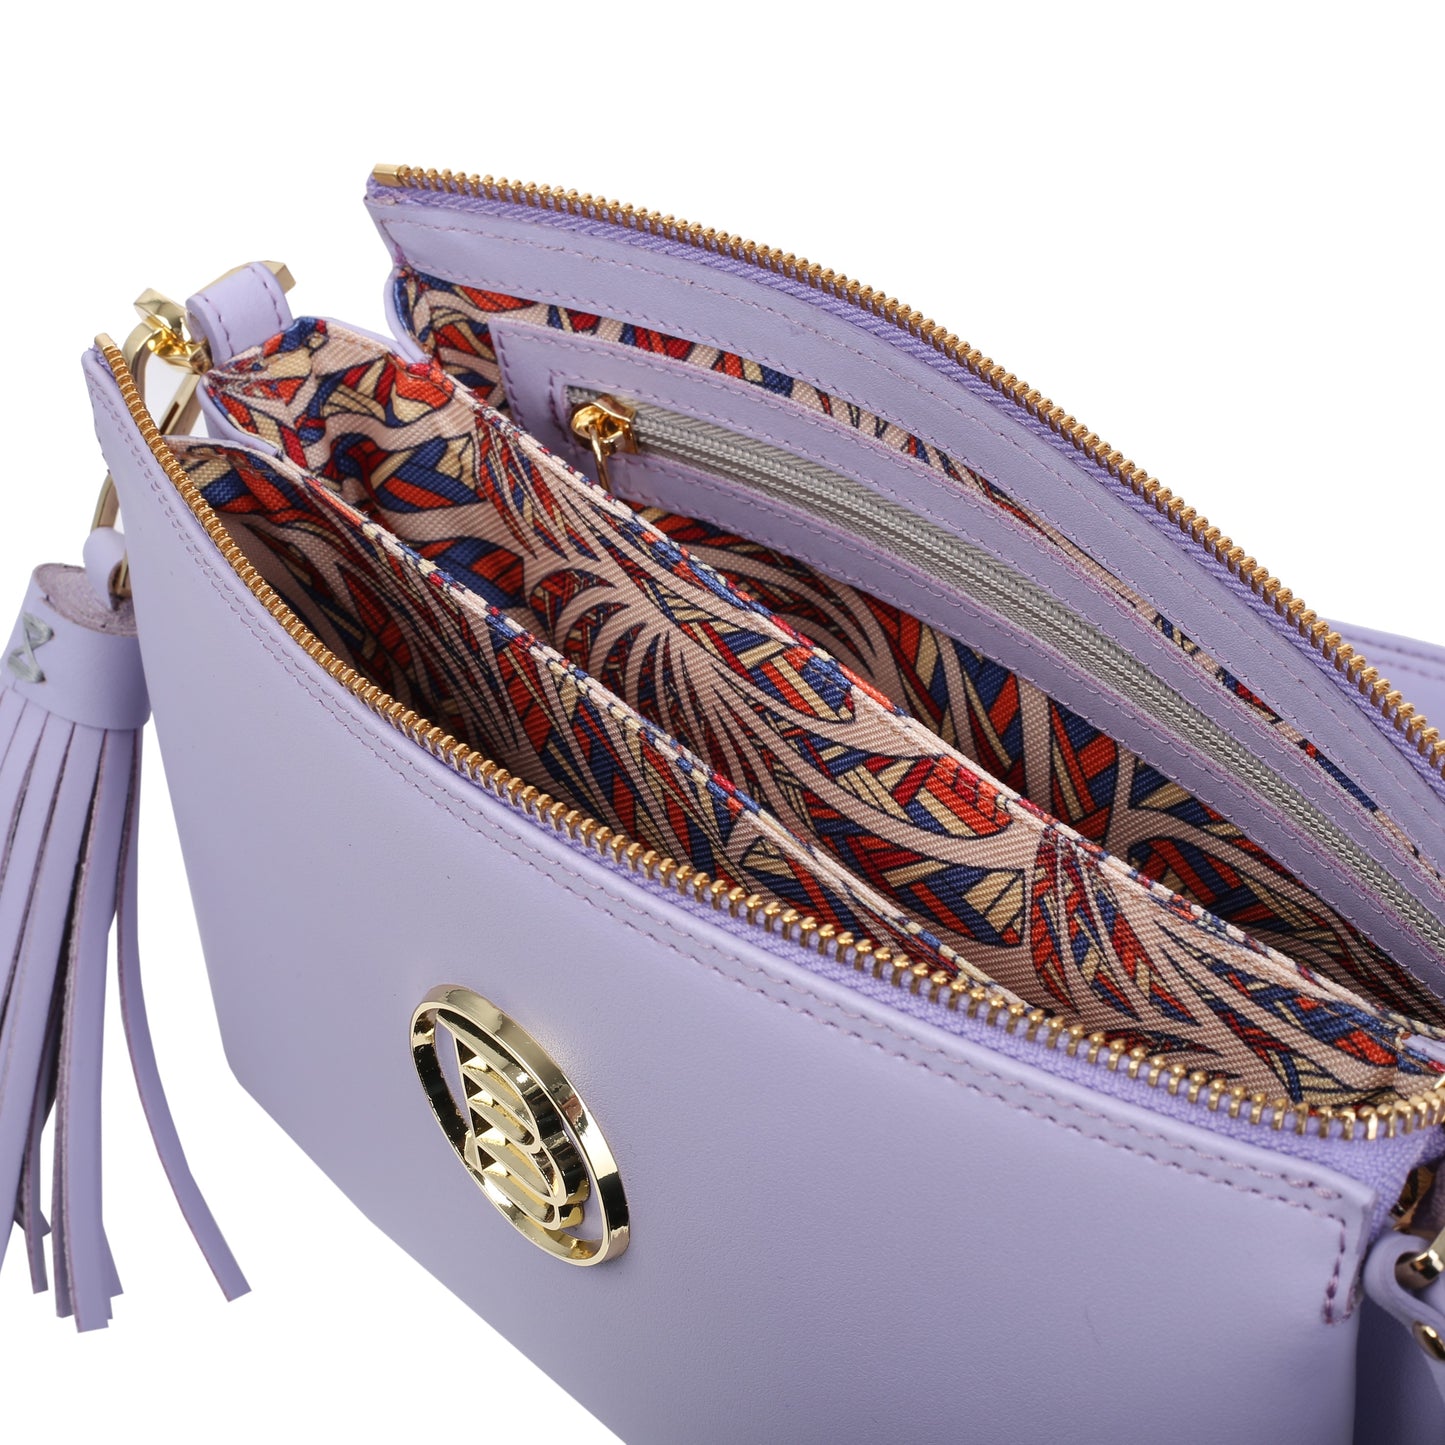 ELISE NAPA LAVENDER women's leather handbag